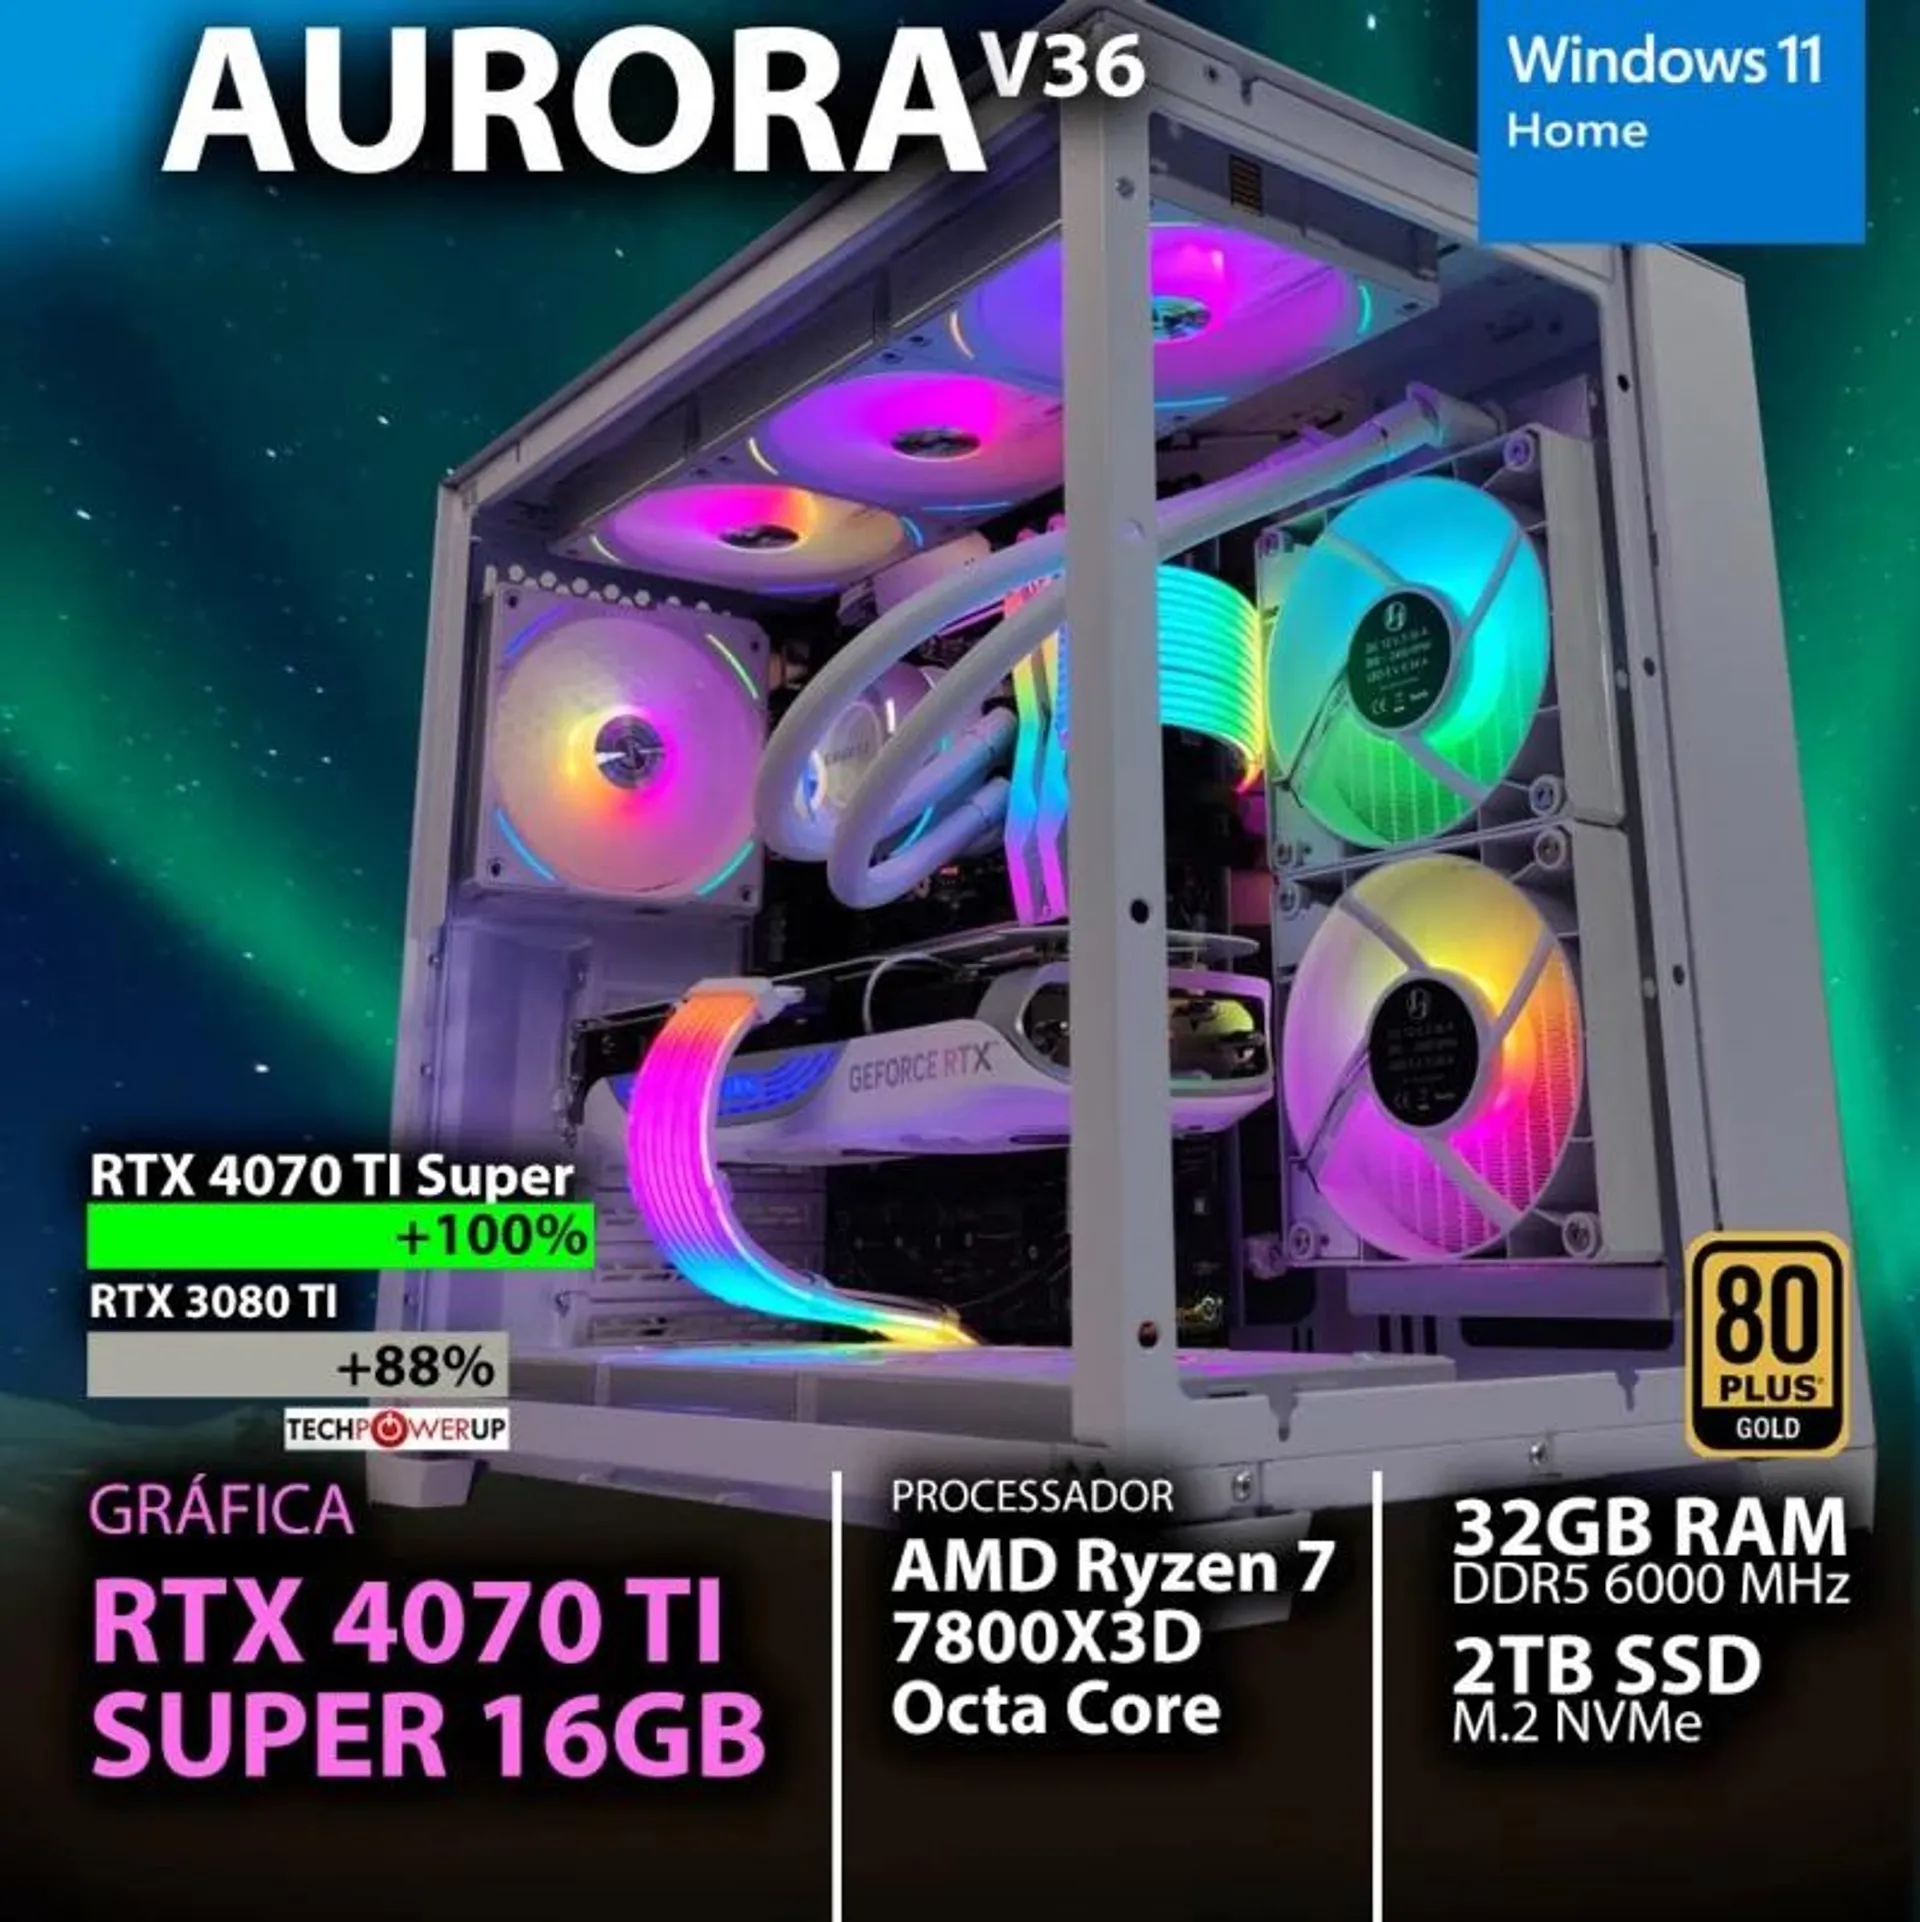 COMPUTADOR GAMING - AMD Ryzen 7 7800X3D / RTX 4070 TI SUPER 16GB / 32GB RAM / 2TB SSD / Windows 11 Home - CHIP7 AURORA V36